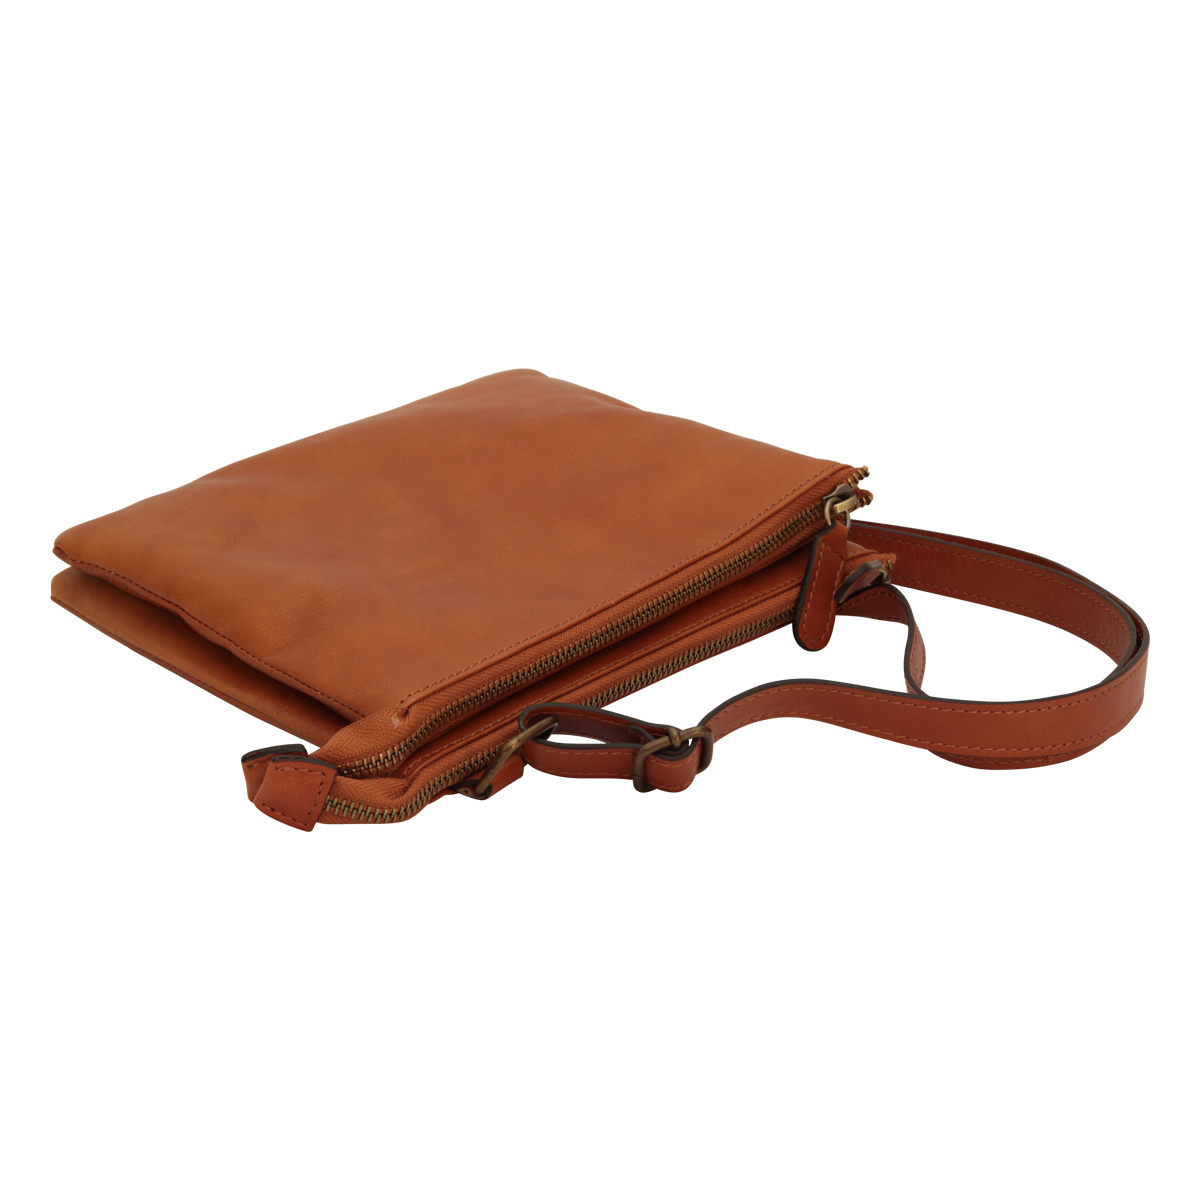 Full grain calfskin shoulder bag - brown colonial | 413489CO | EURO | Old Angler Firenze